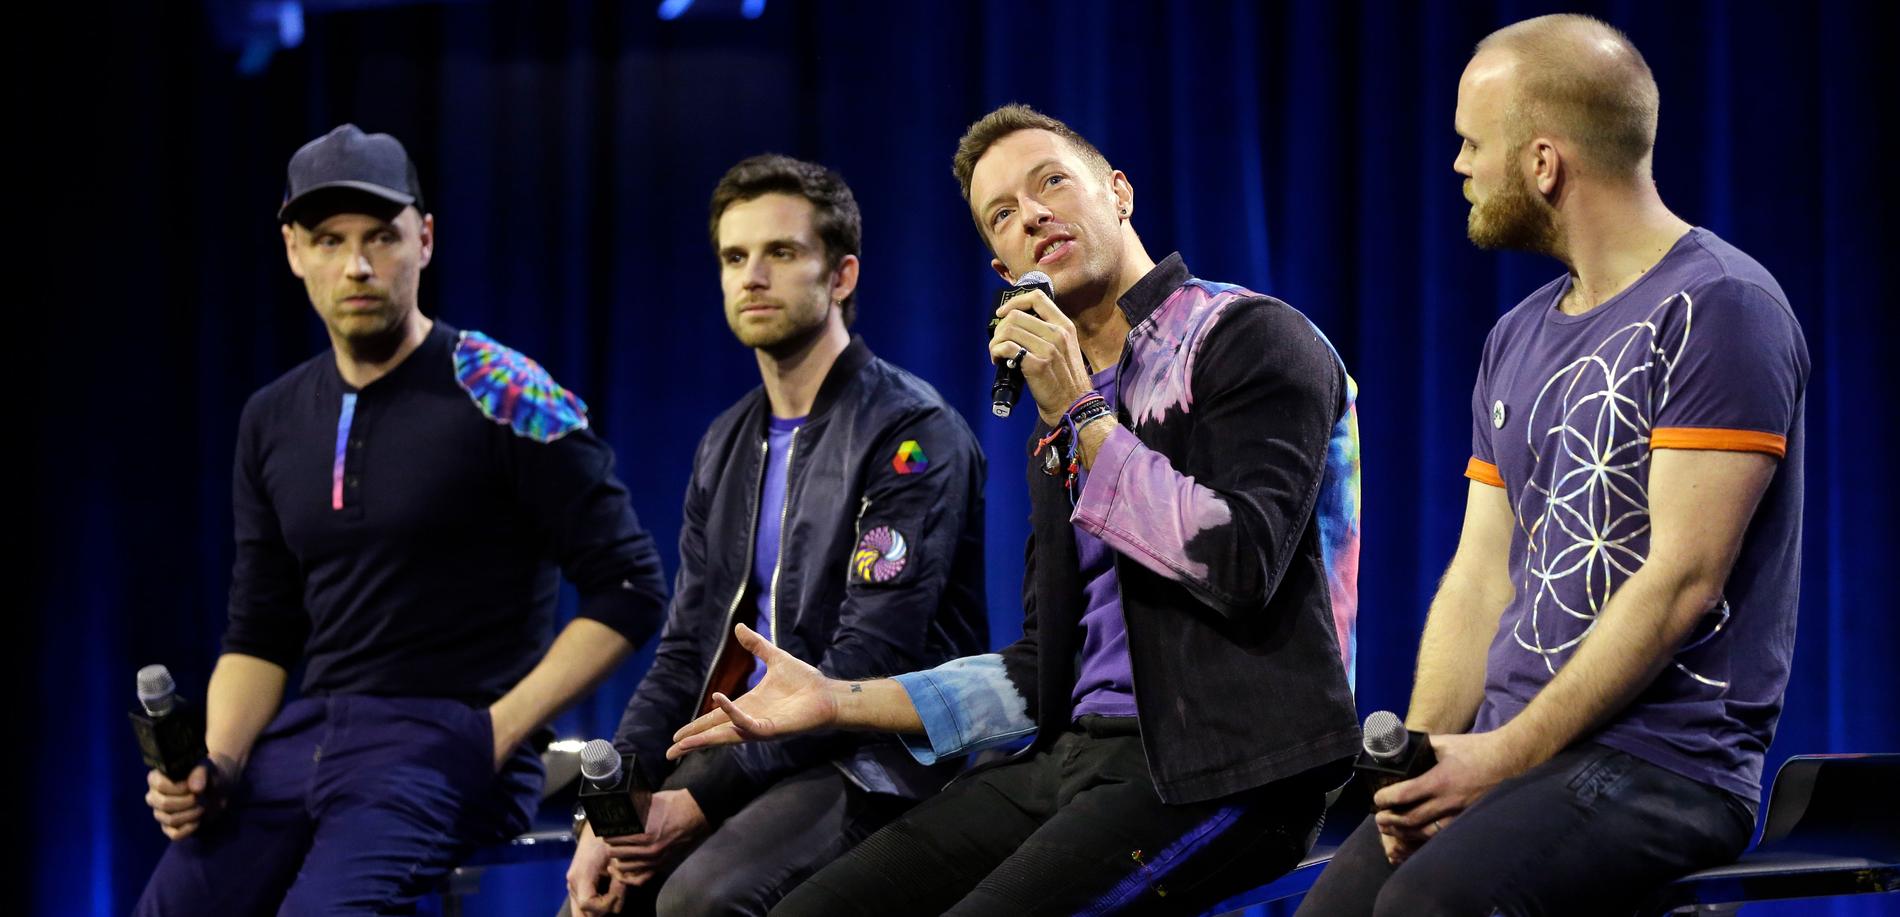 Bandet Coldplay